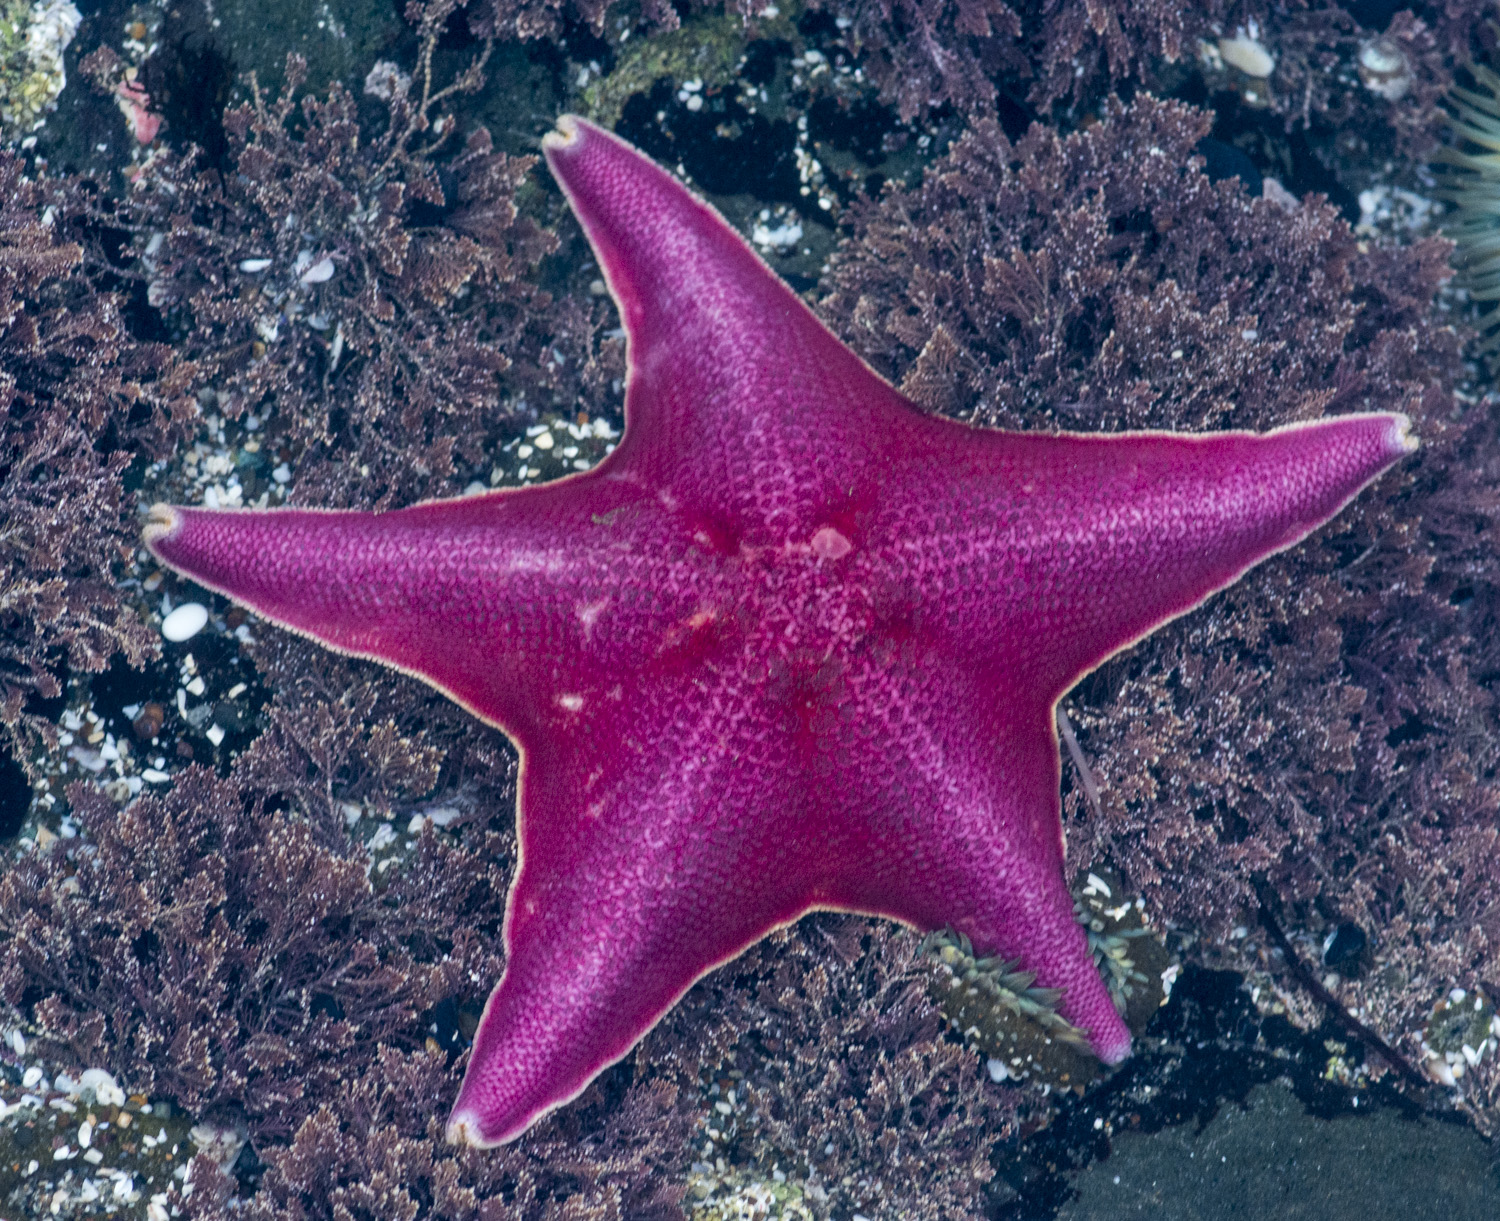 a purple starfish in an underwater scene near the seaweed